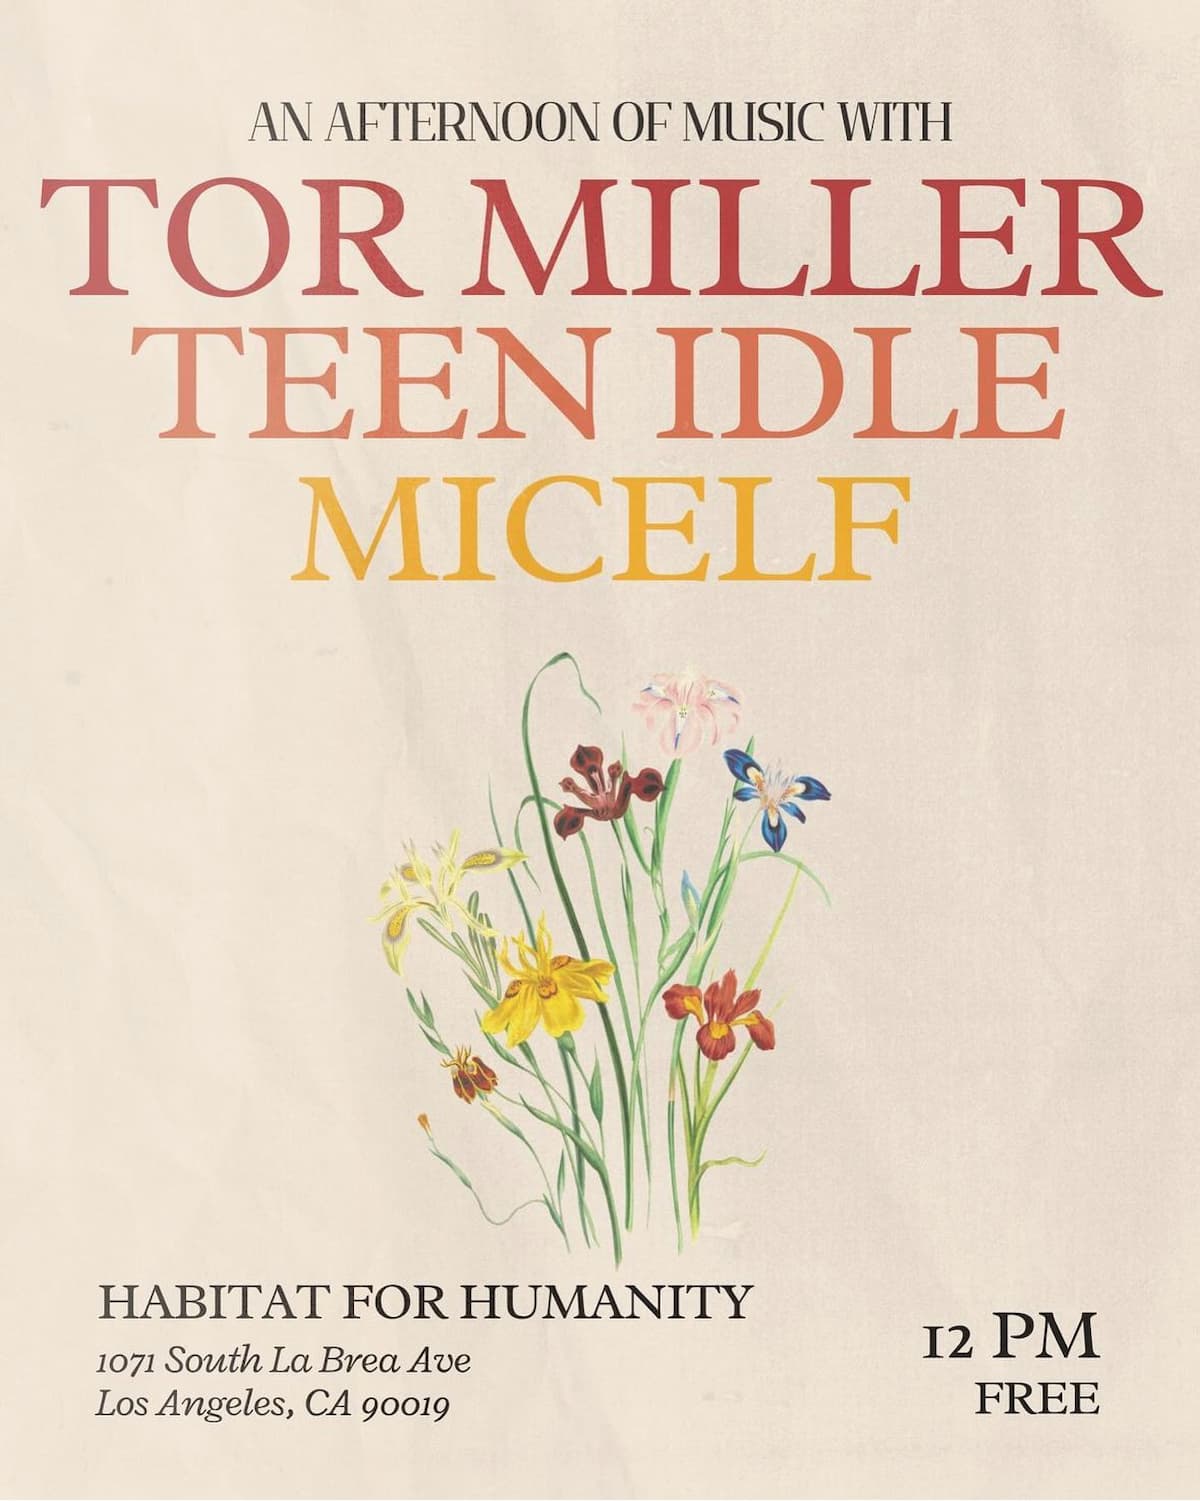 Tor Miller / Teen Idol / Micelf